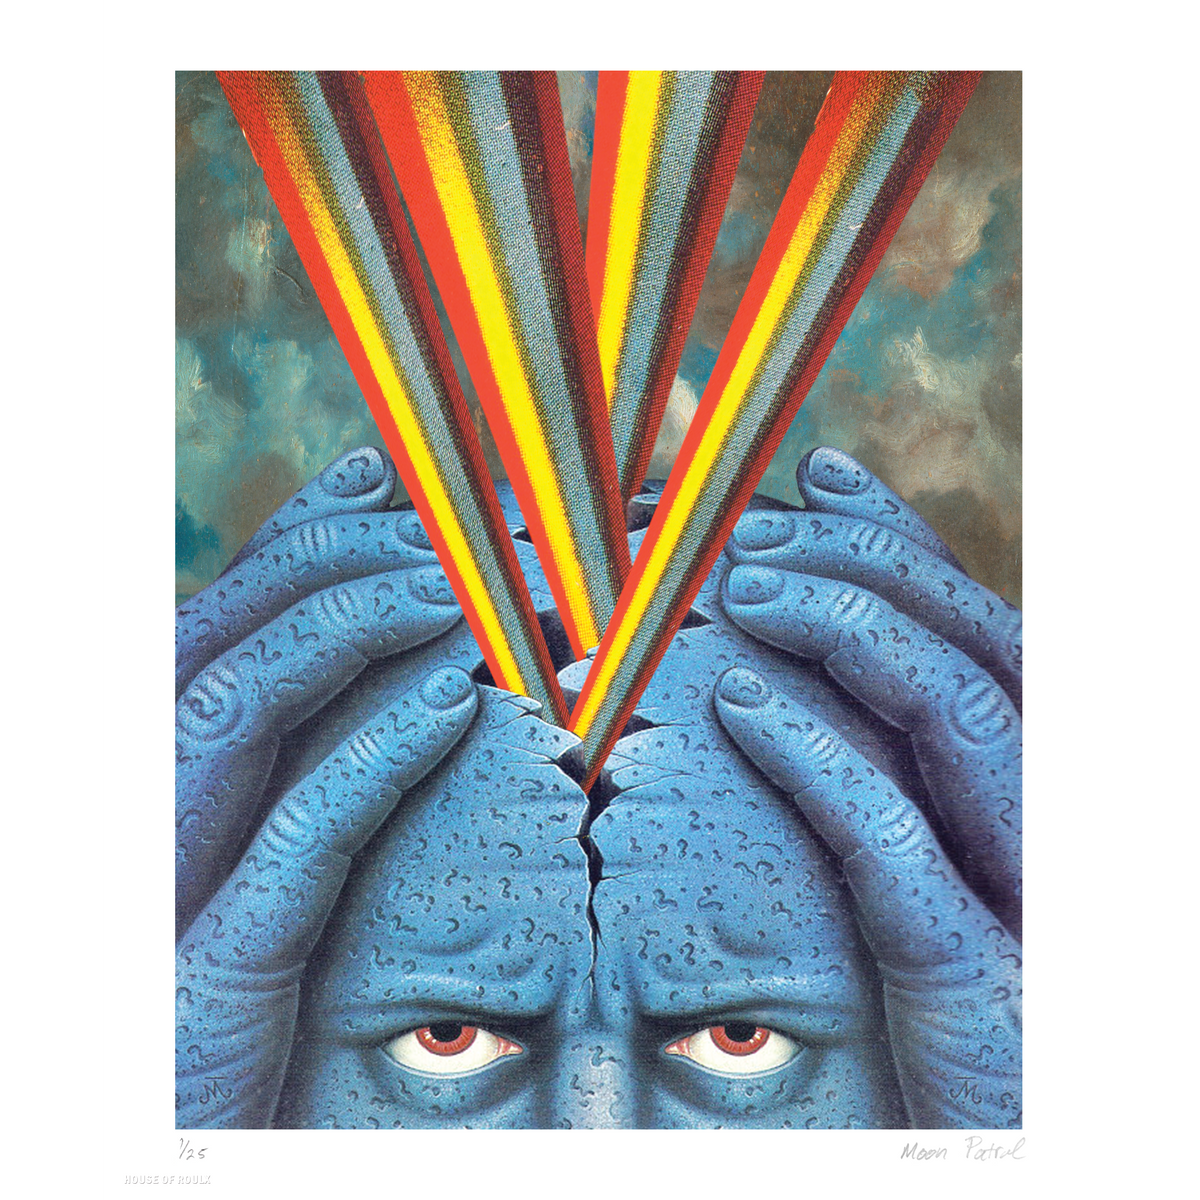 Moon Patrol &quot;Blue Rock Migraine&quot; - Archival Print, Limited Edition of 25 - 14 x 17&quot;